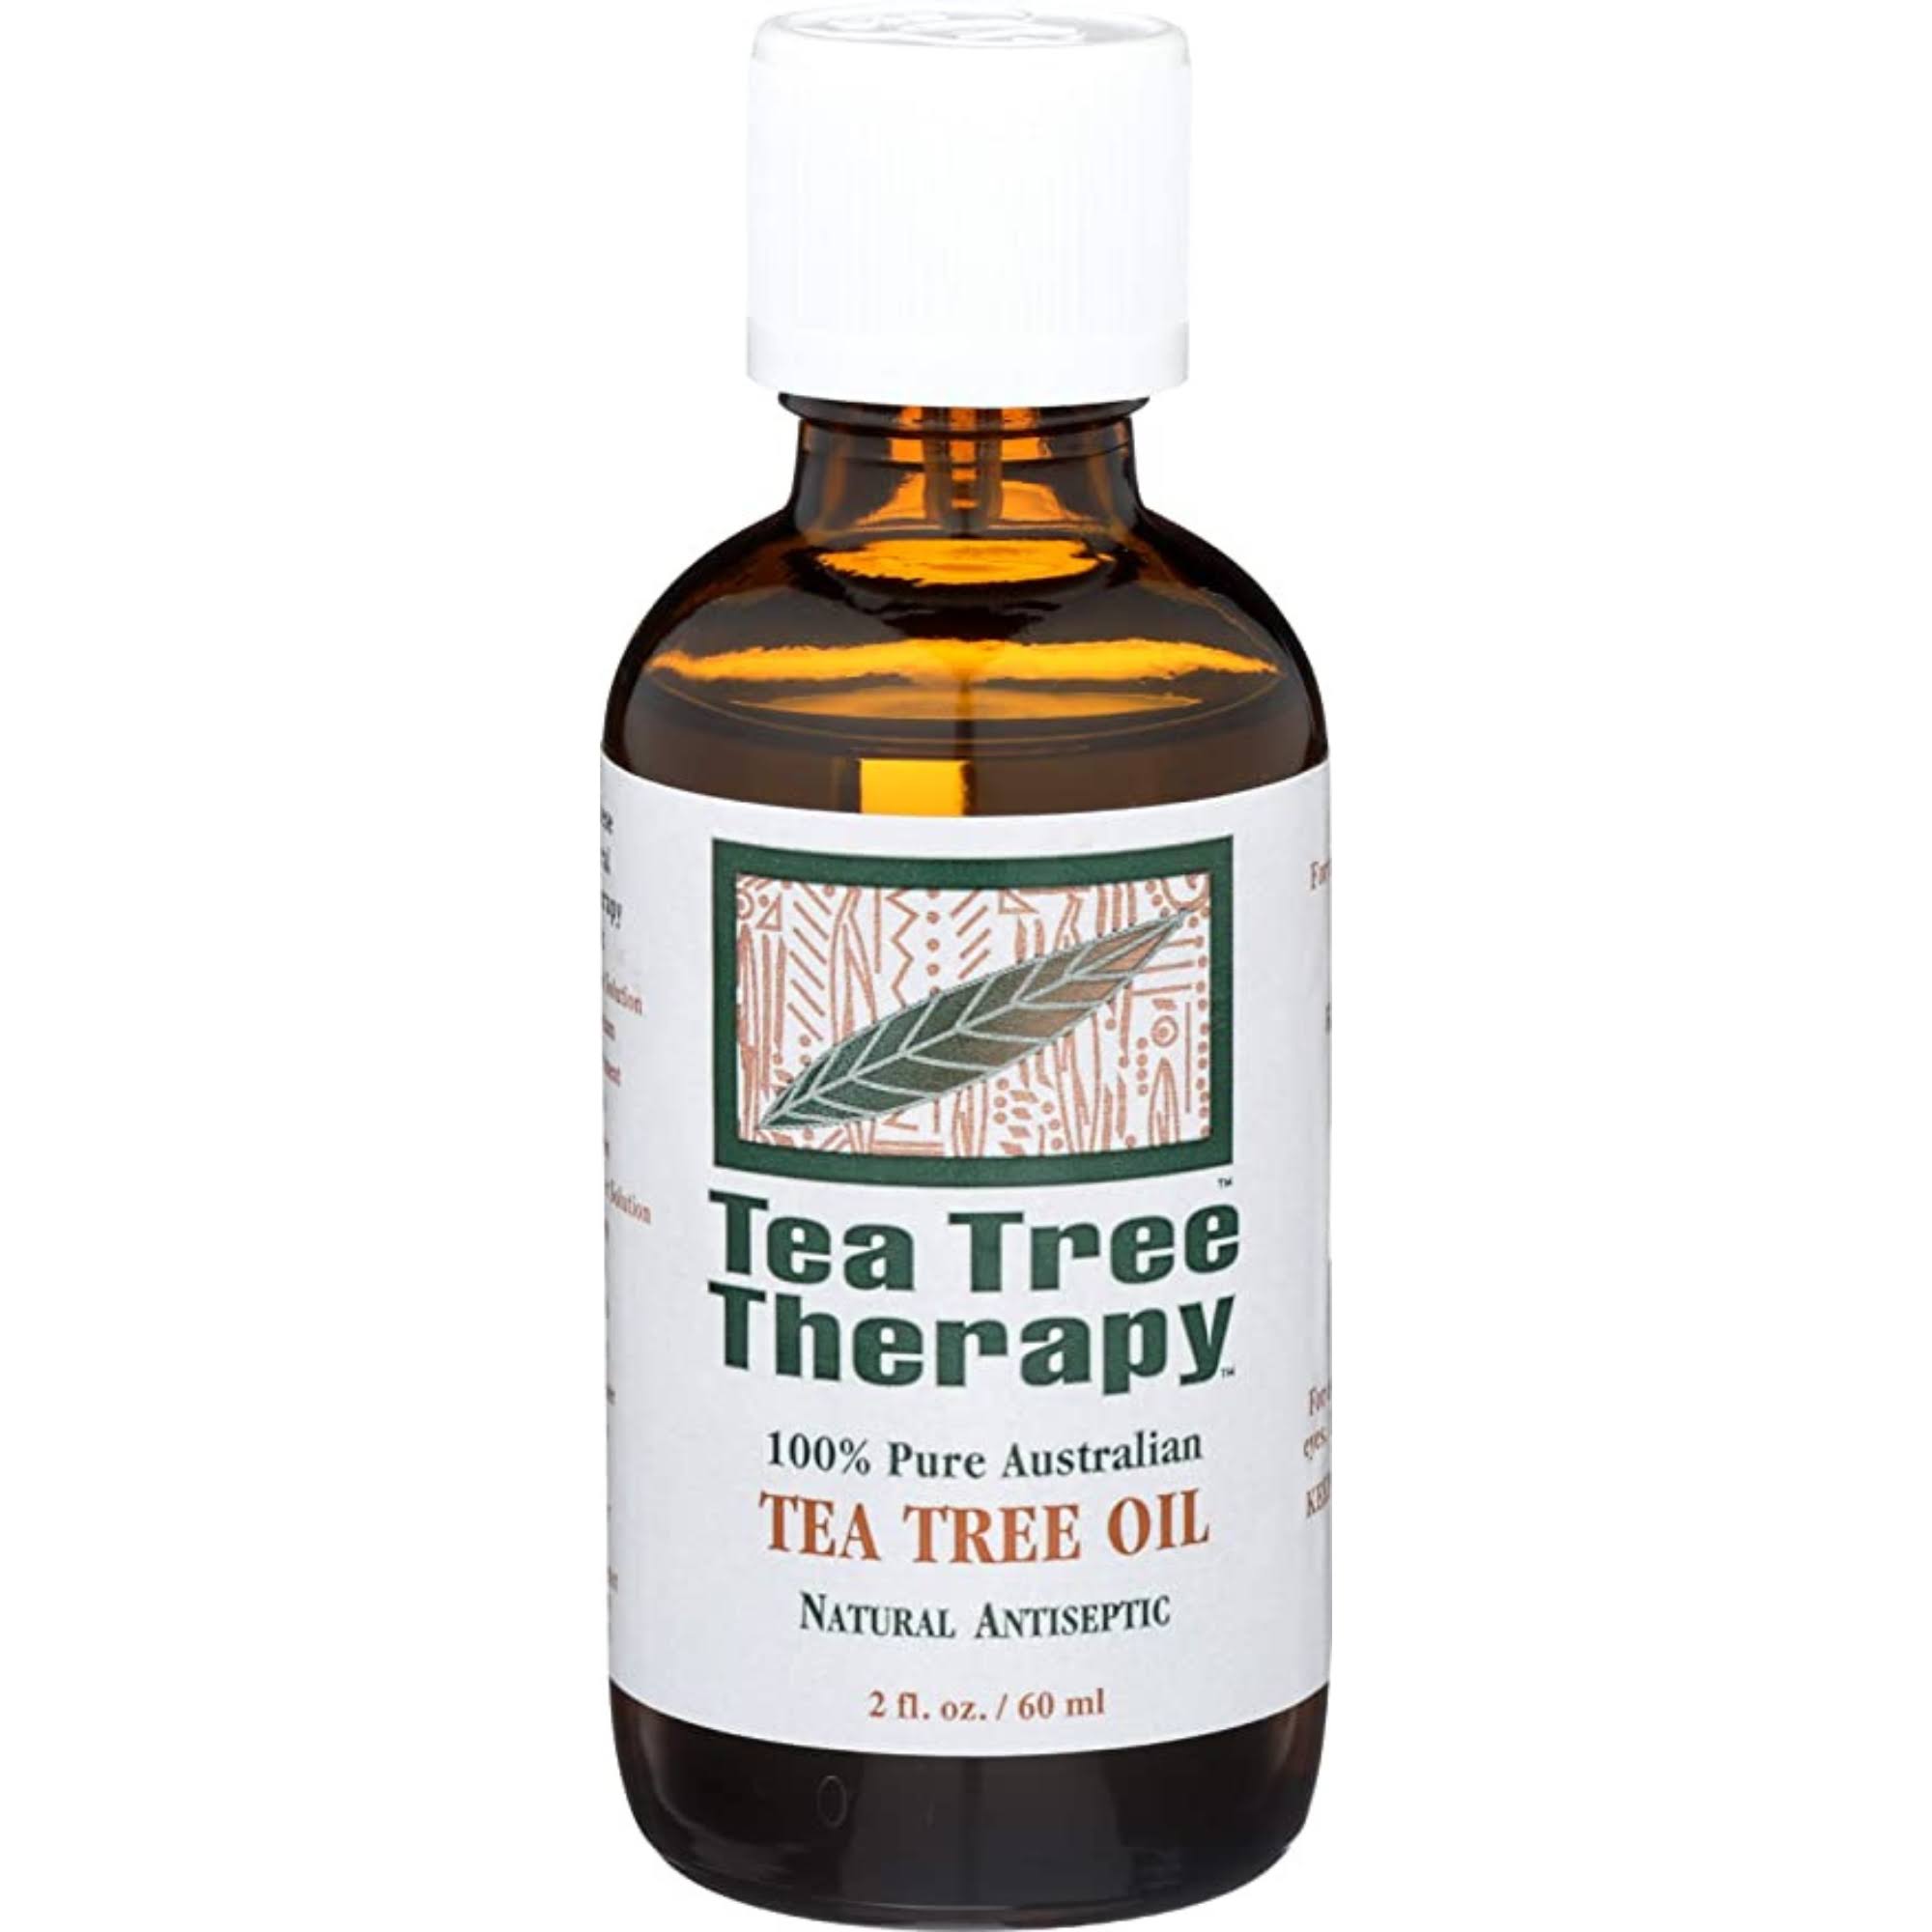 Tea Tree Therapy Pure Tea Tree Oil - 2oz